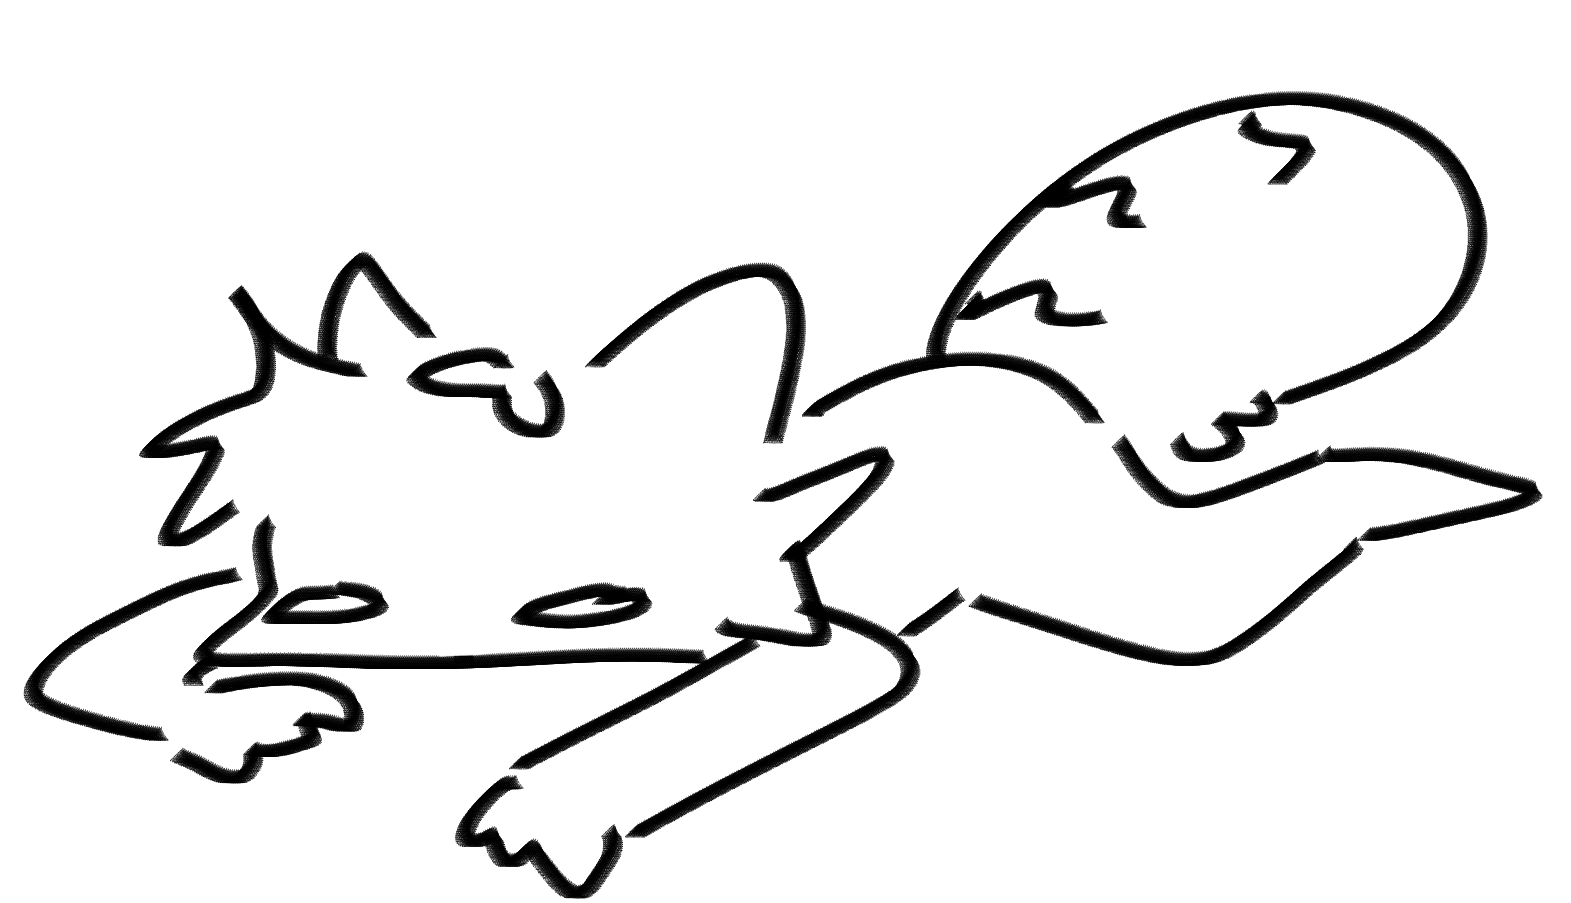 A chibi drawing of Ox's sona, Uda, sprawled on the ground.